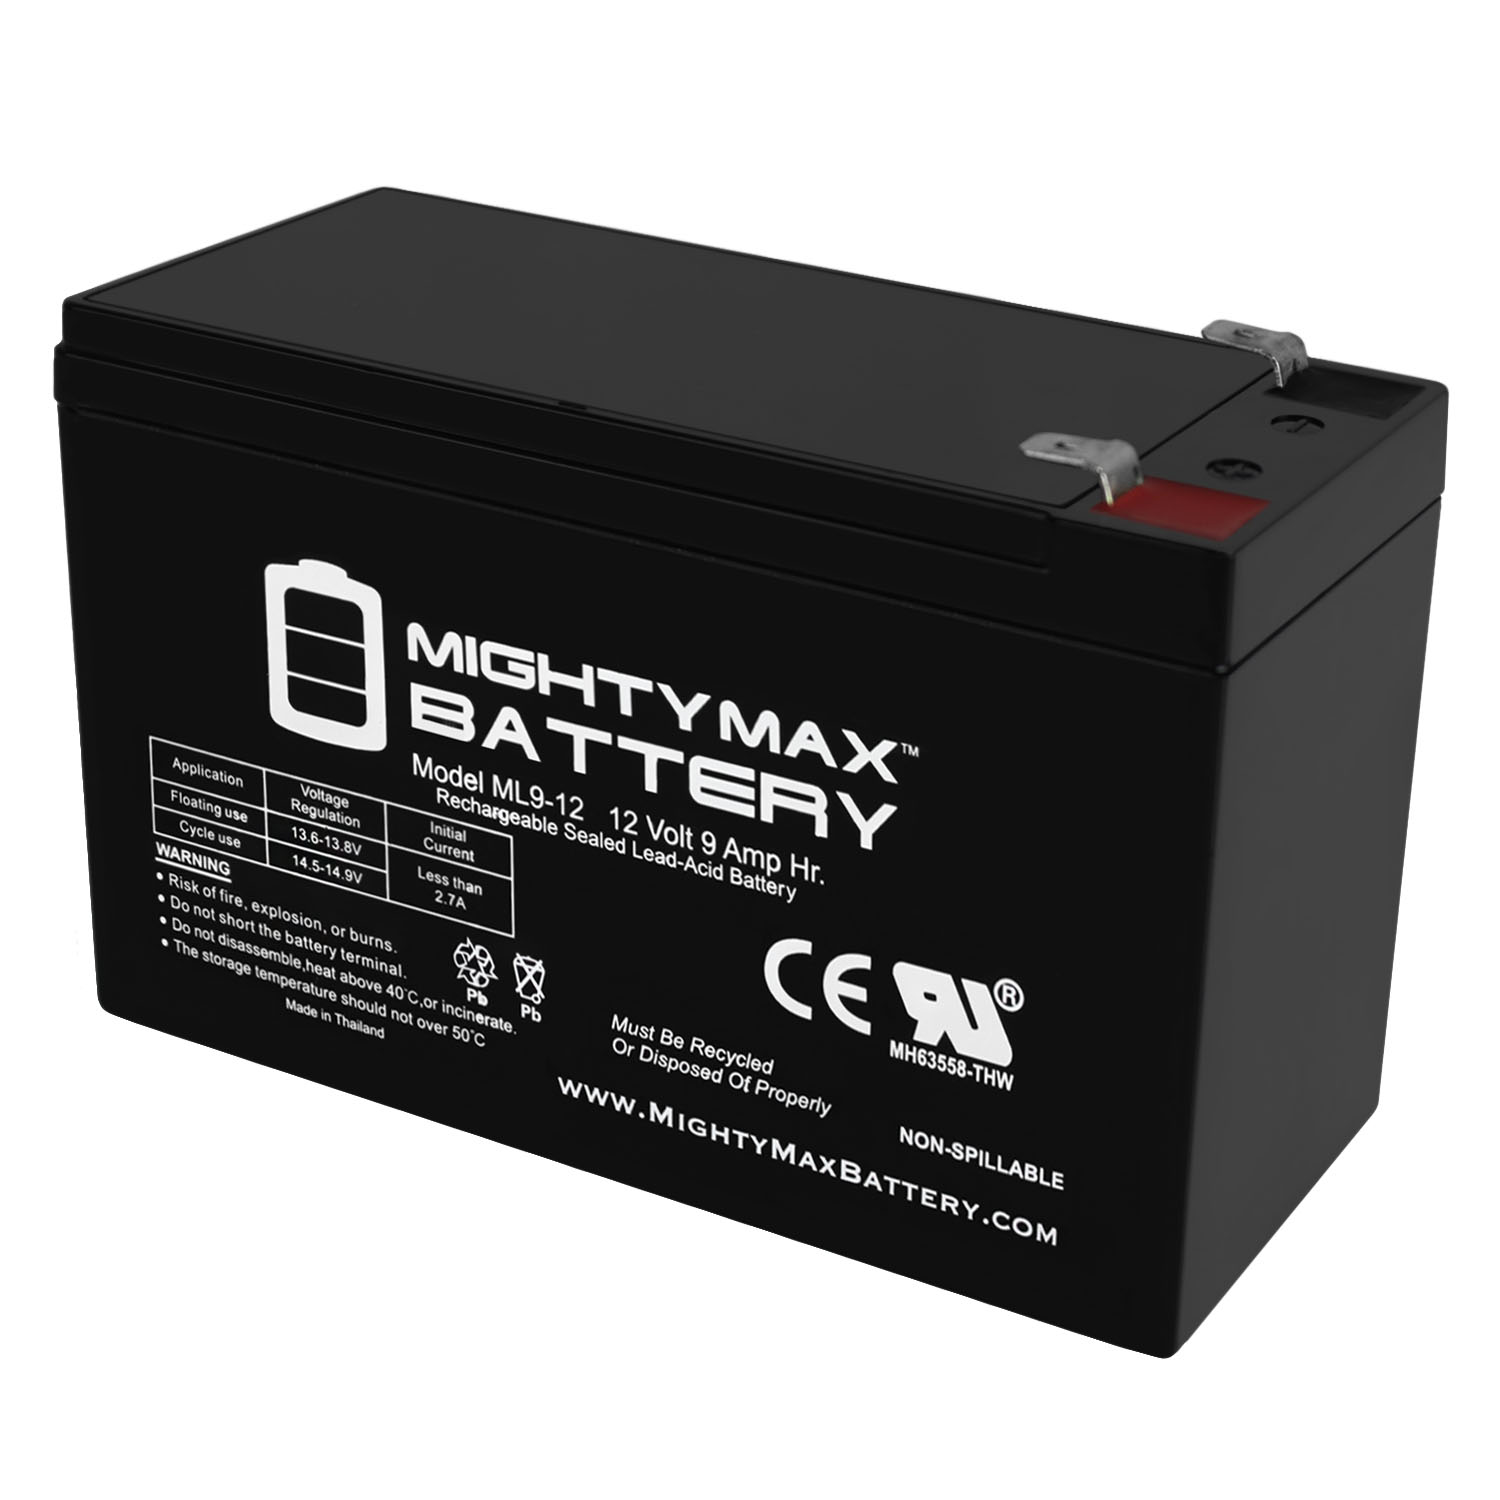 12V 9Ah SLA Replacement Battery for Leoch DJW12-9.0 T2, DJW 12-9.0 T2